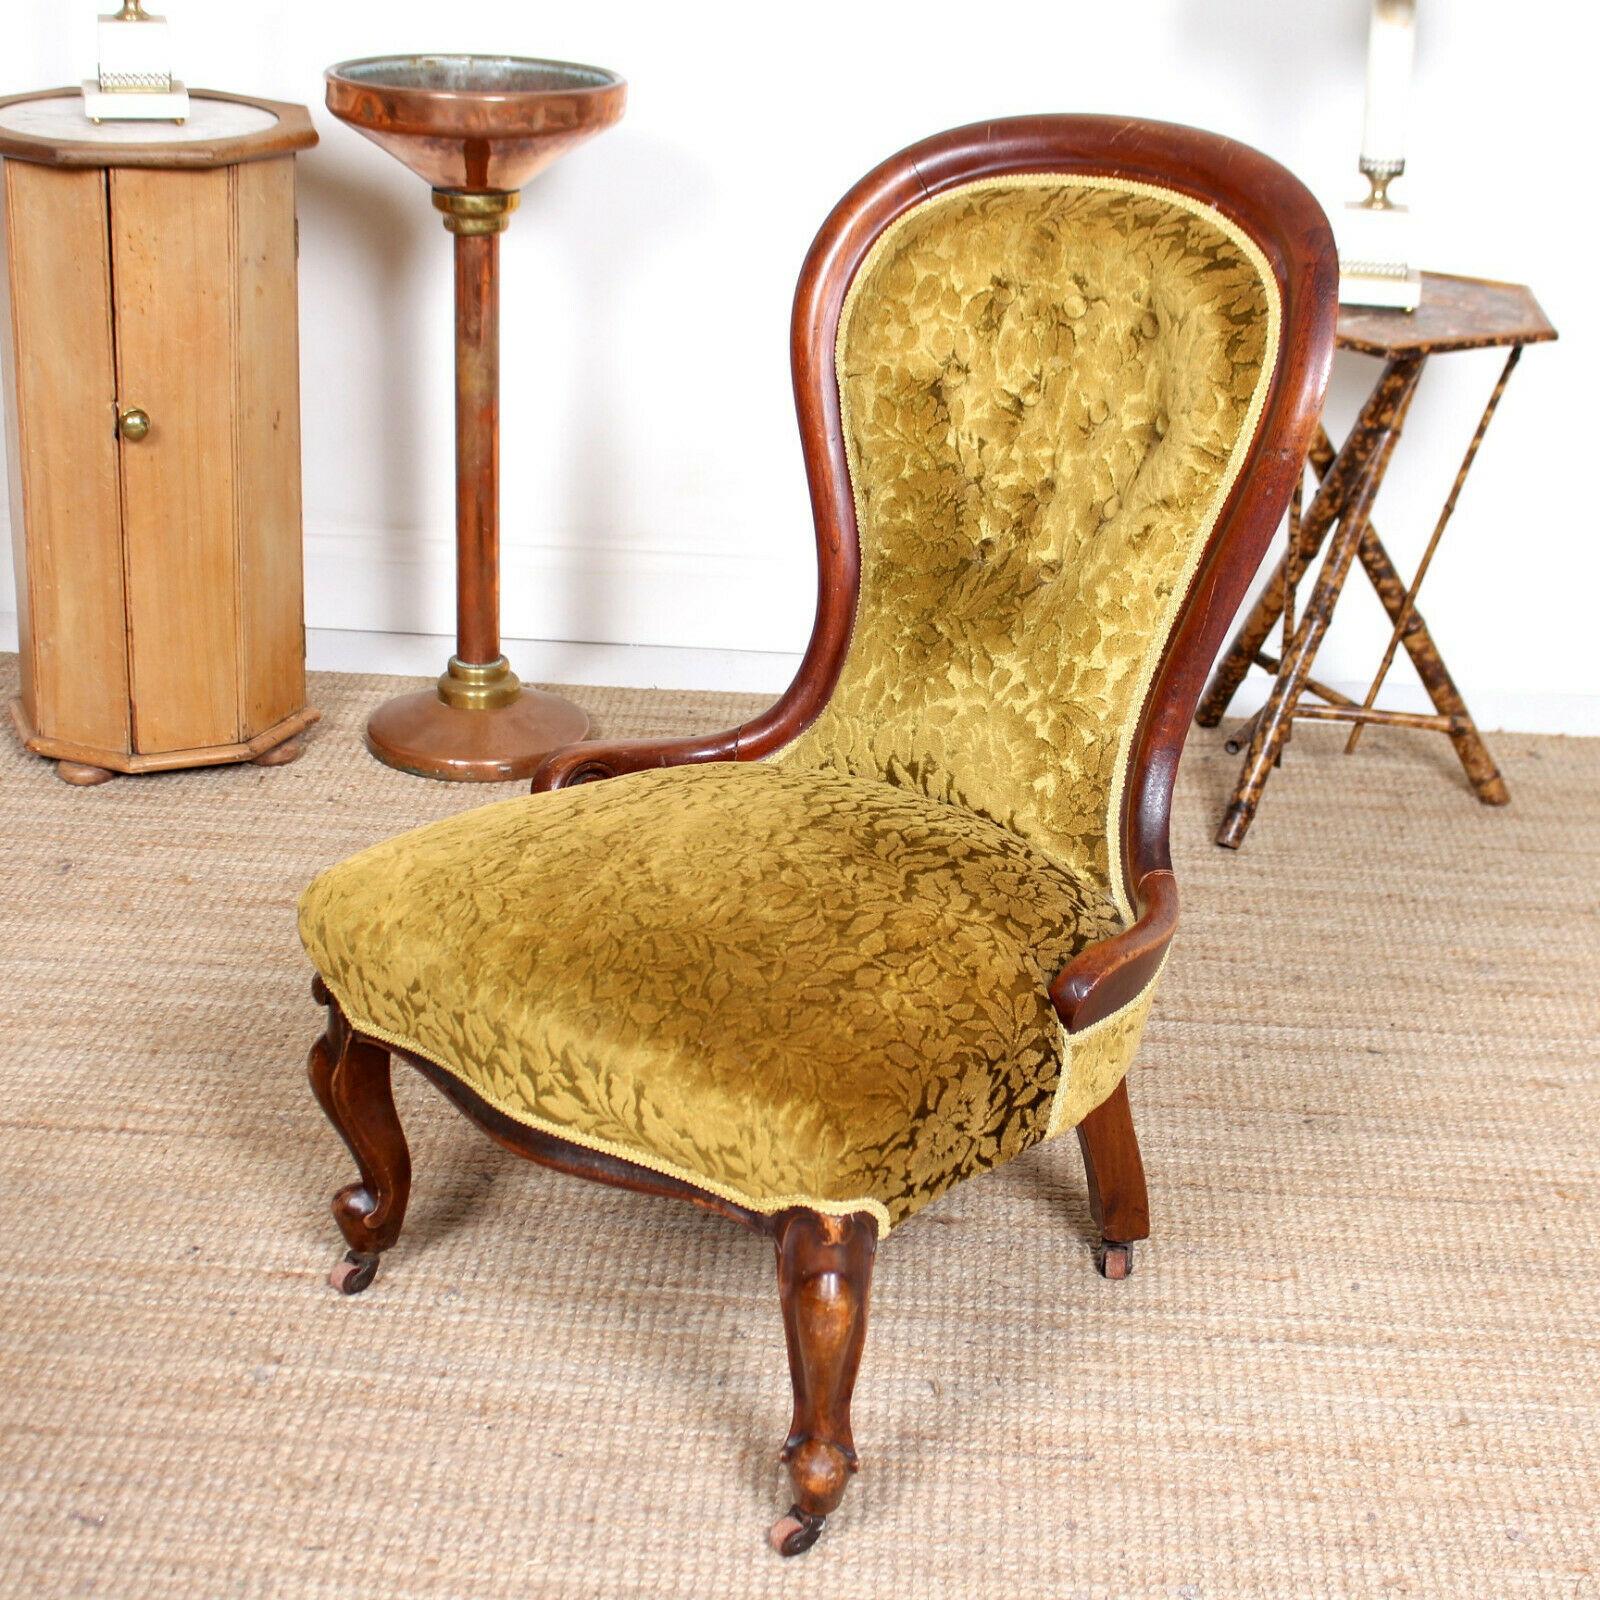 English Spoon Lounge Chair 19th Century Walnut Nursing Chair For Sale 2